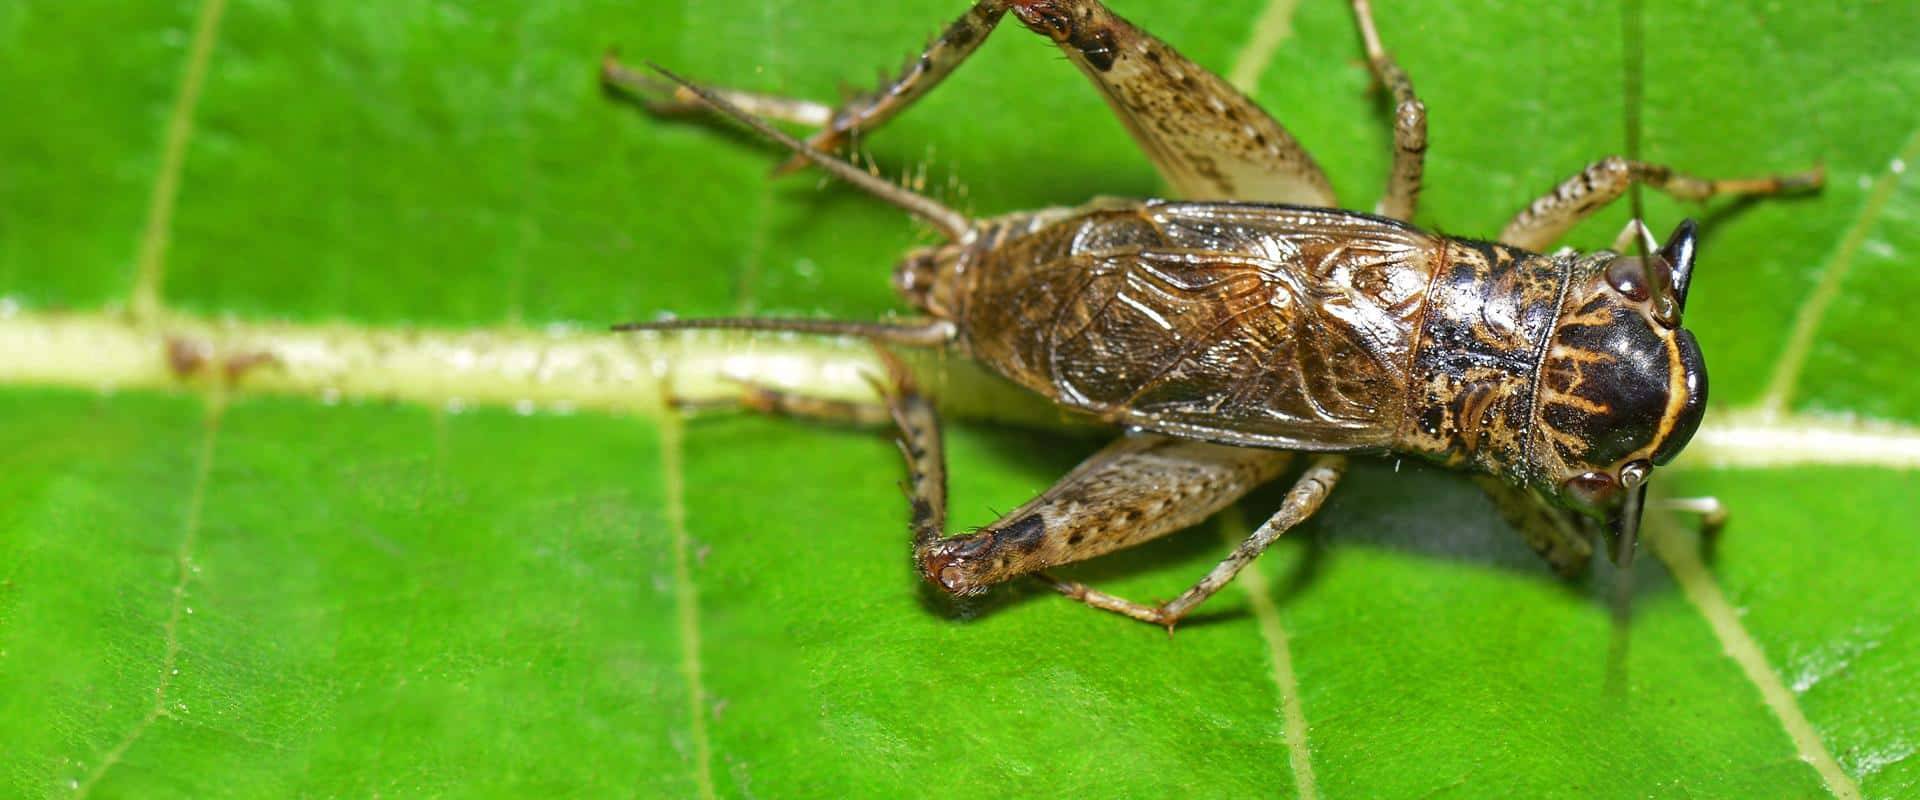 cricket on a leaf